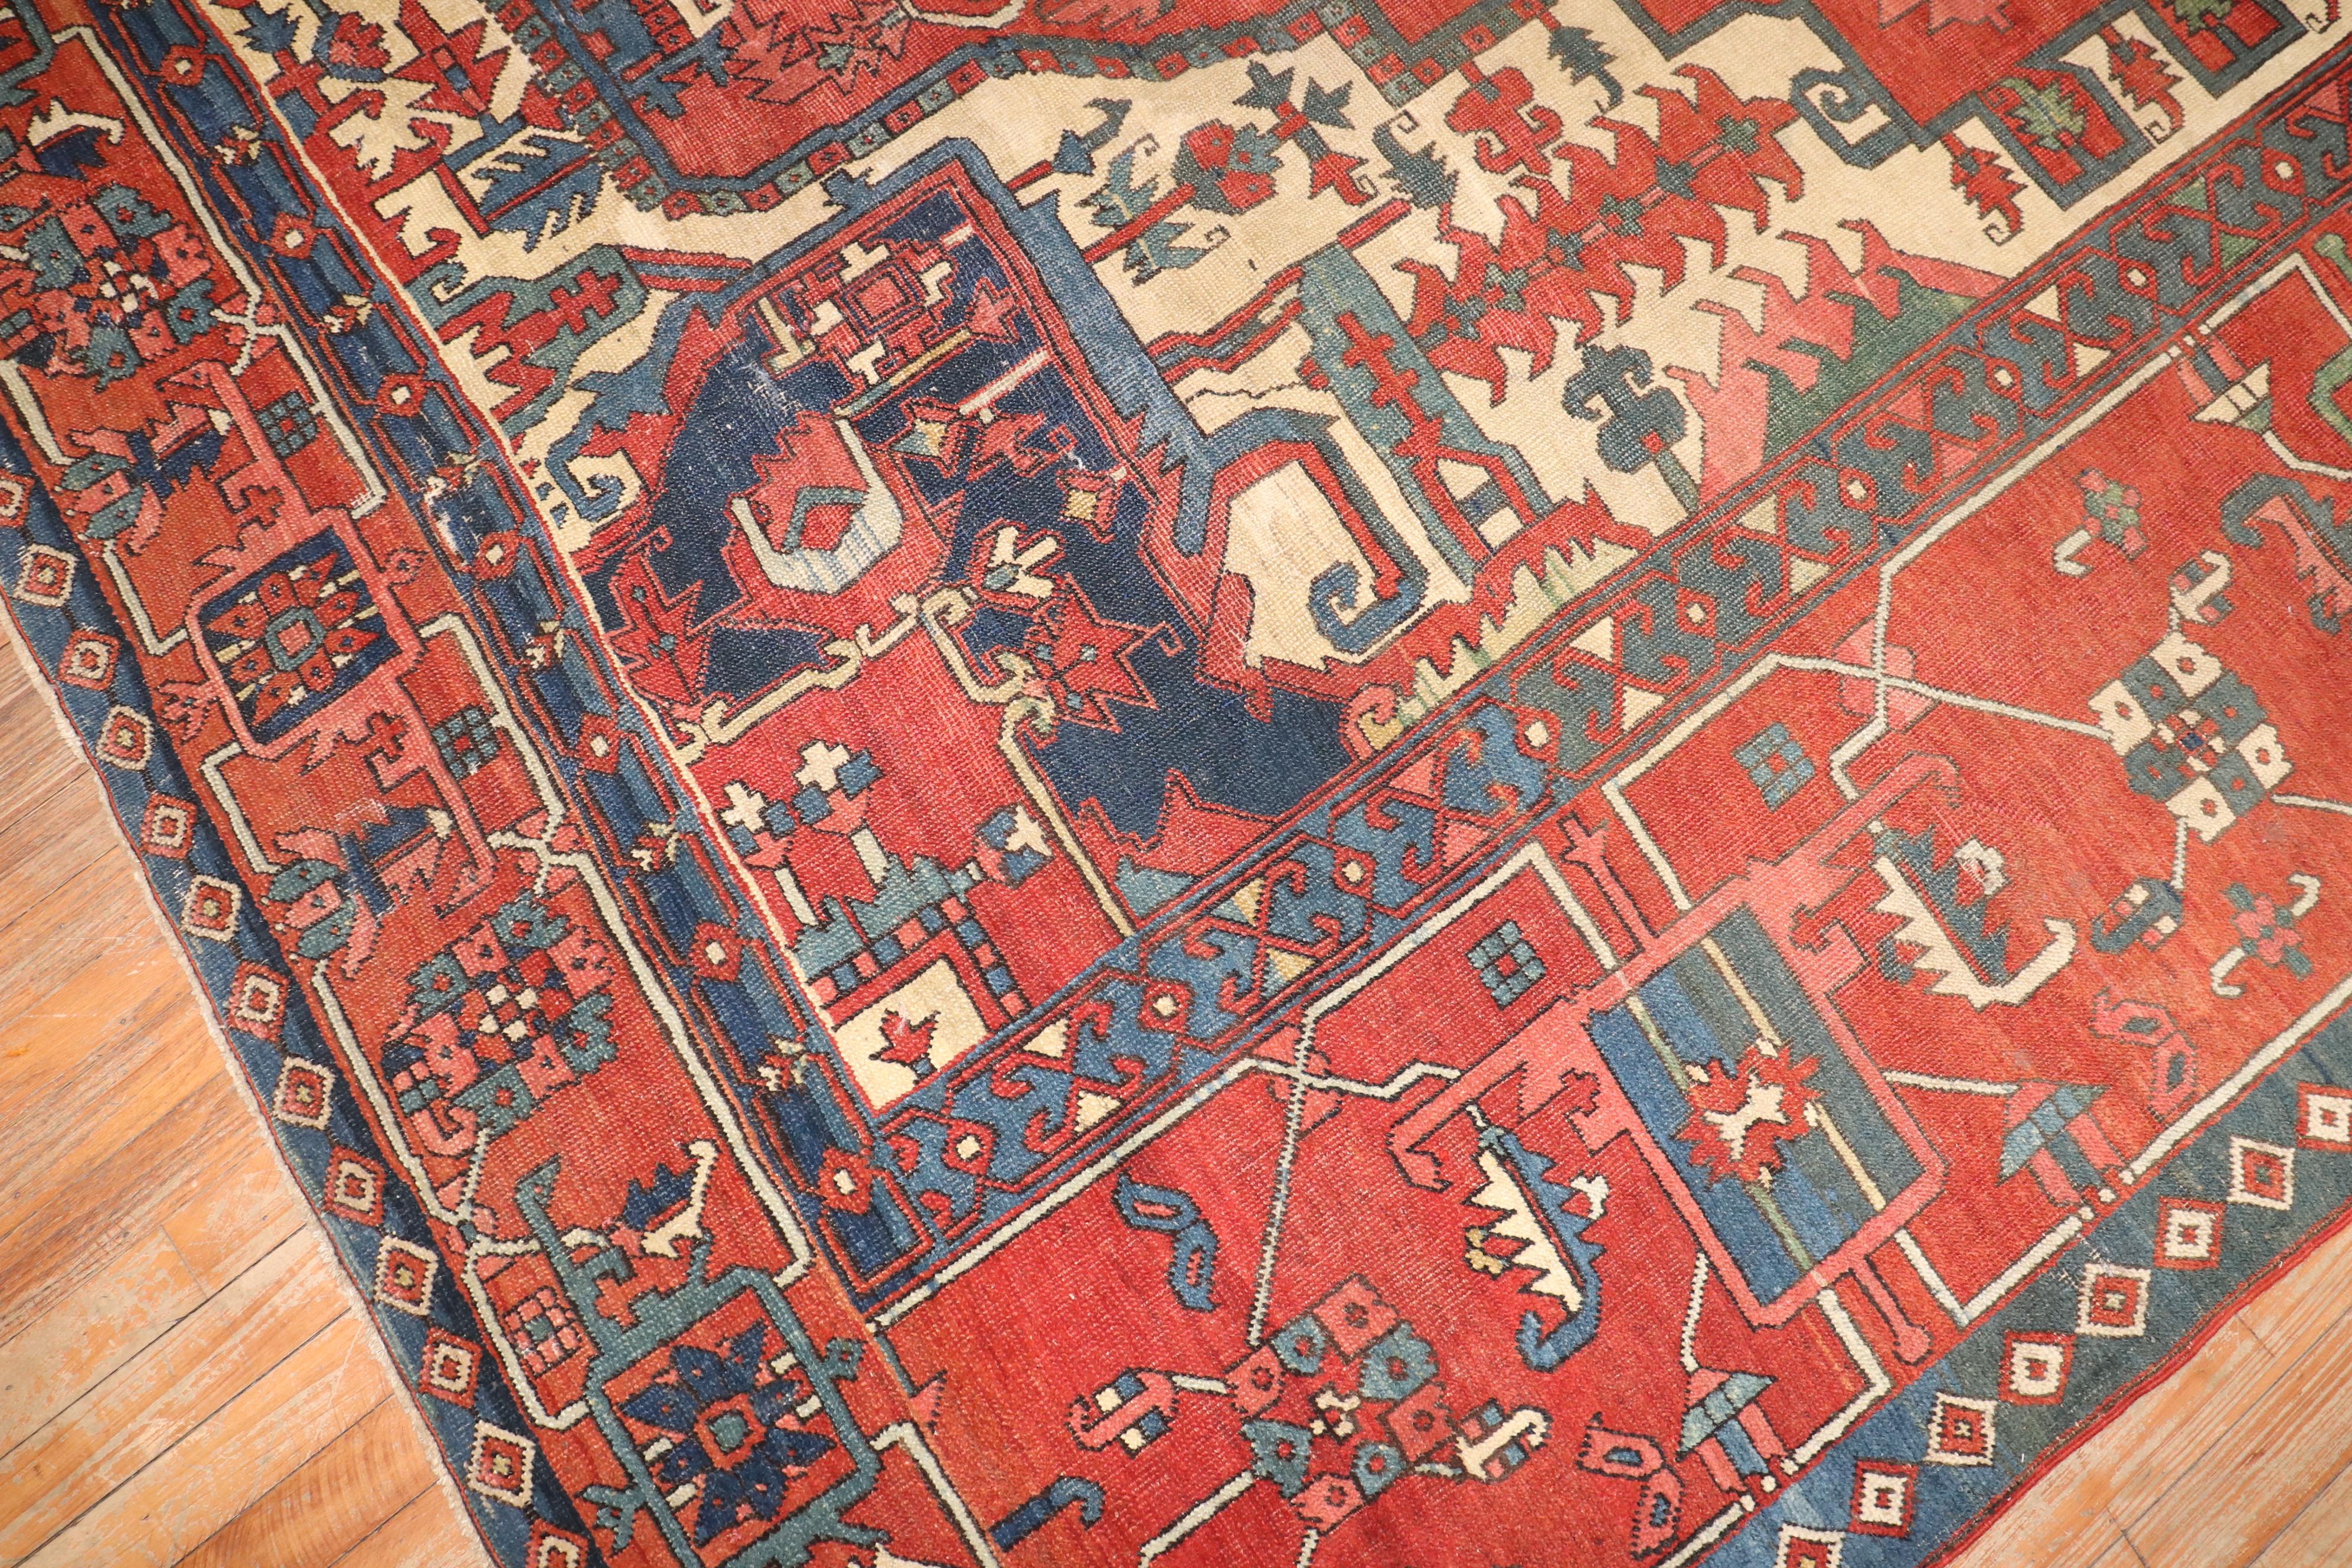 Zabihi Collection Pictorial Animal Figure Antique Persian Serapi Carpet For Sale 9